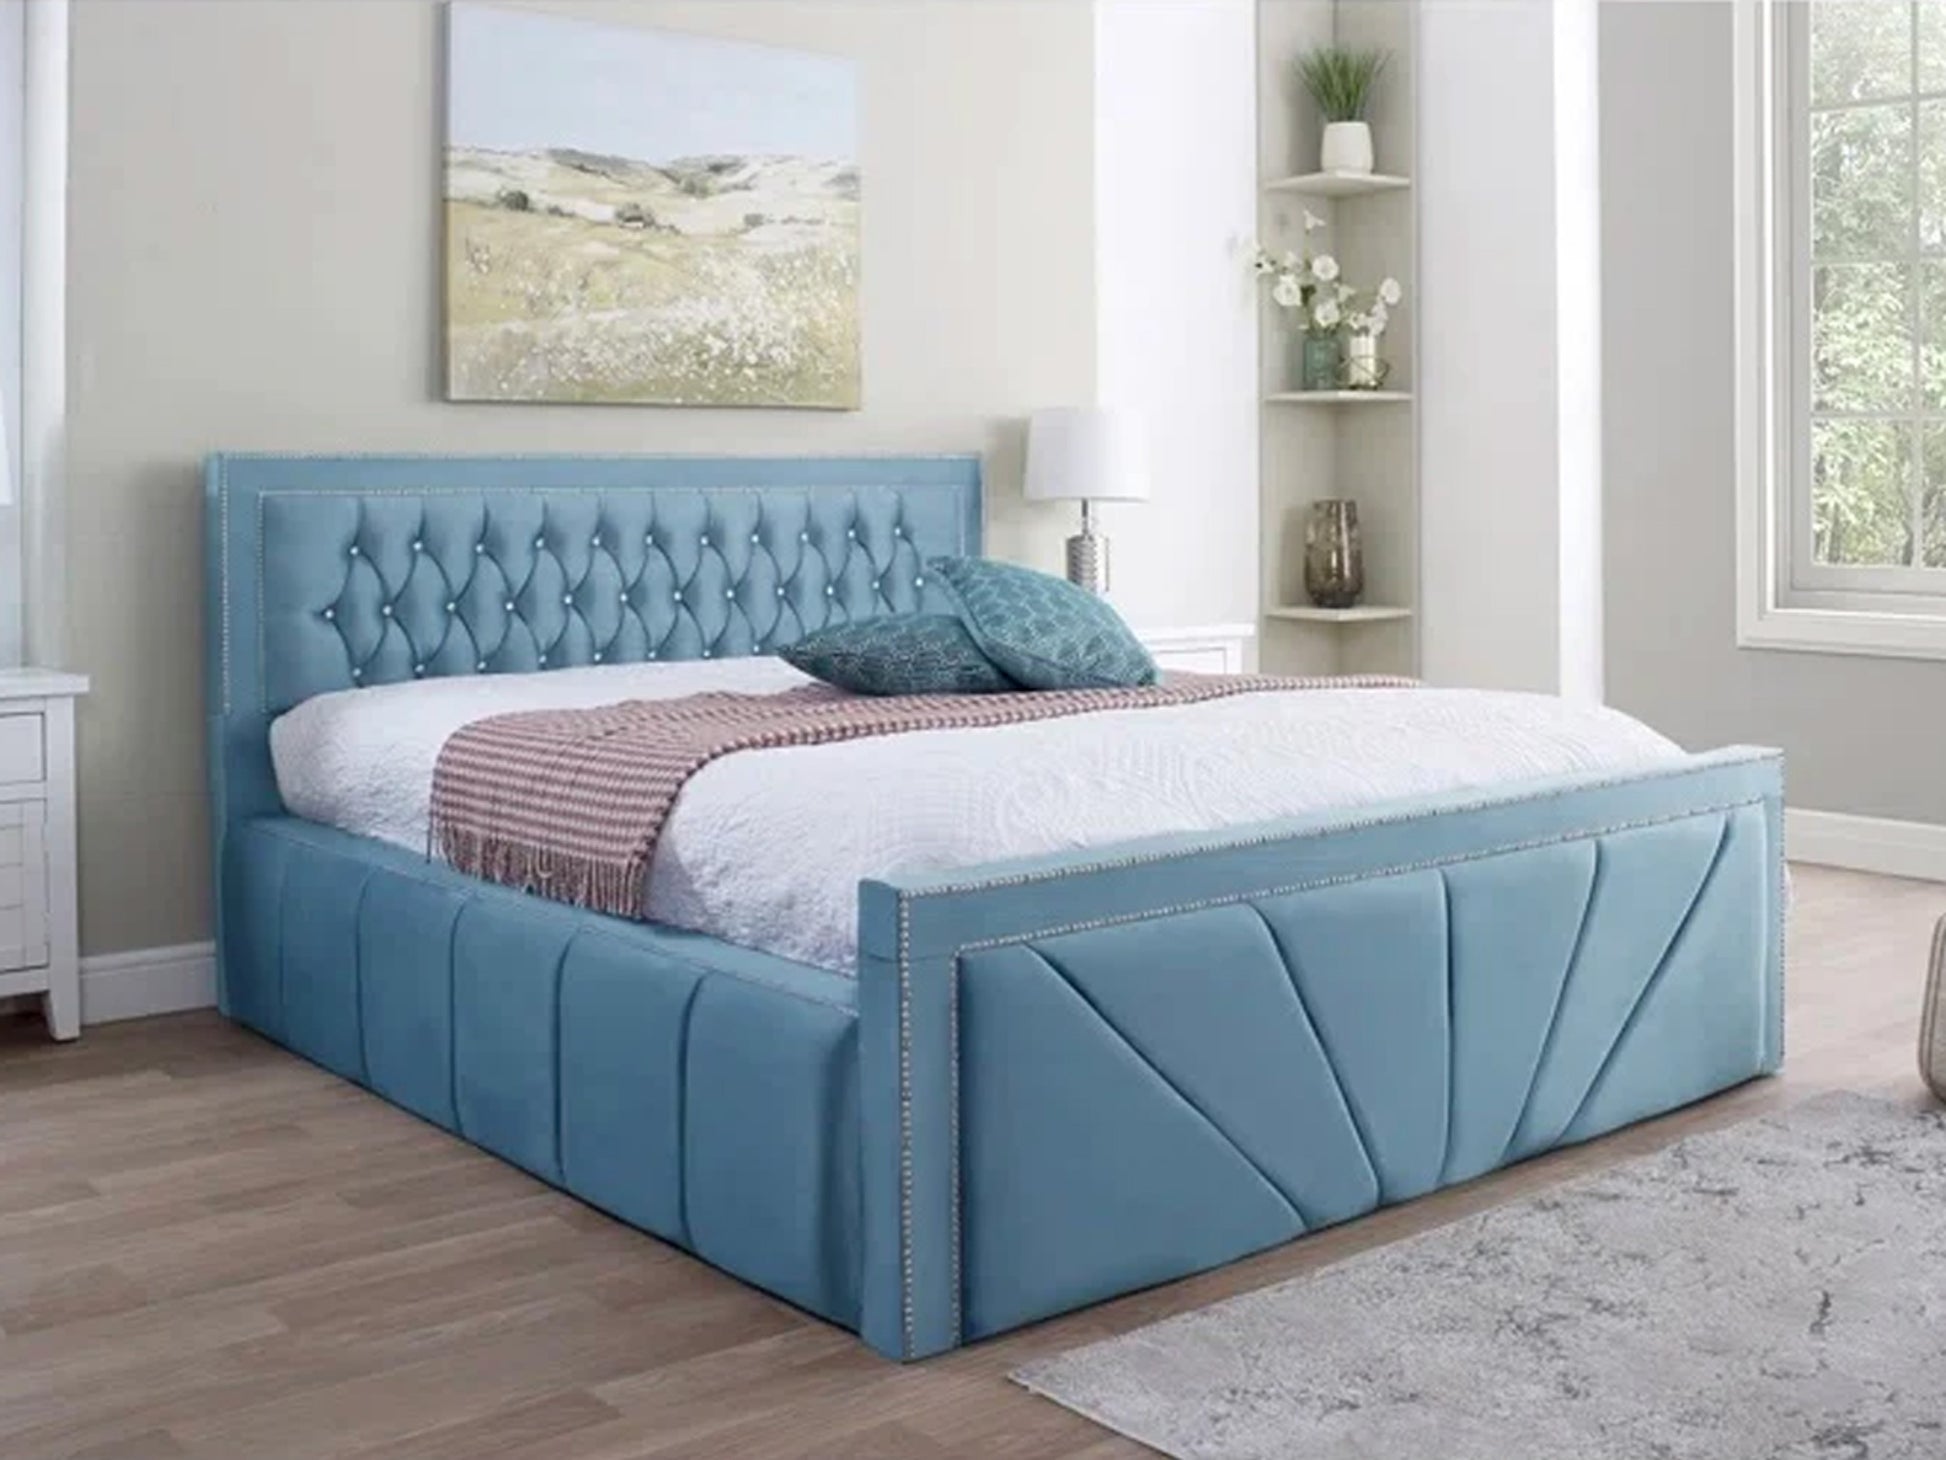 Cozy Crest Bed Frame - Unique Style Beds. 